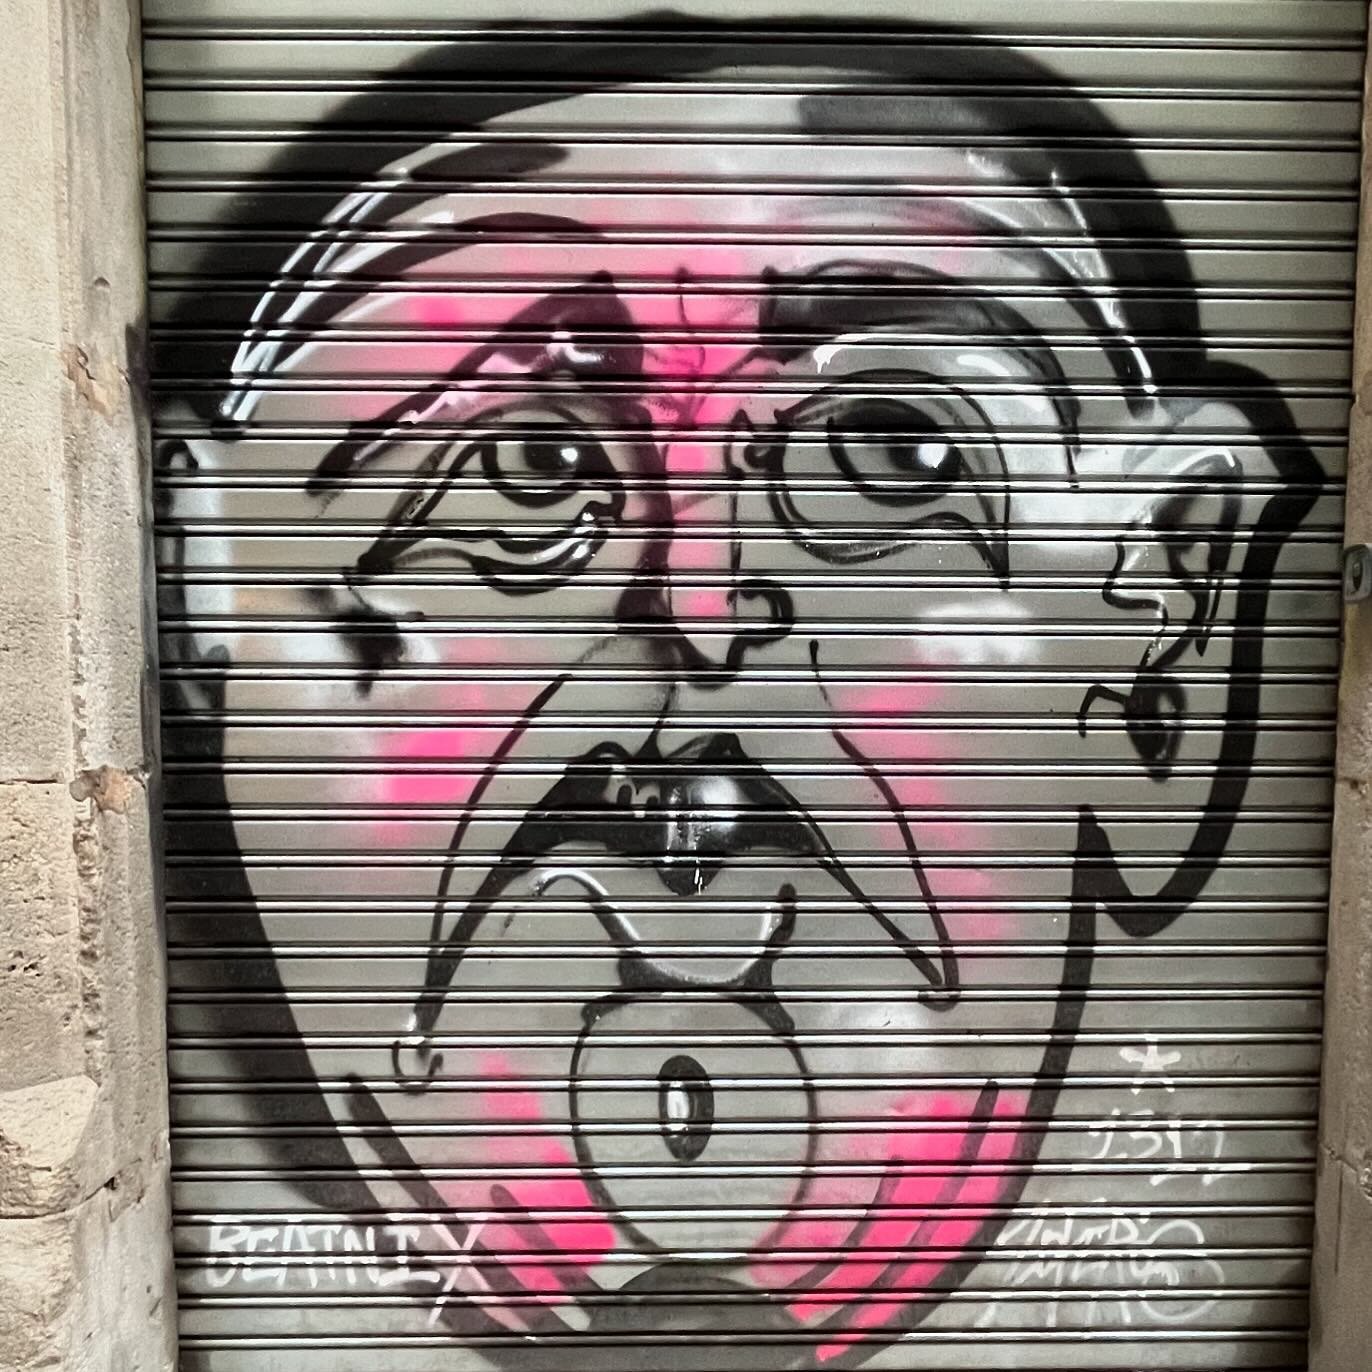 #streetart #bcnstreetart #streetartbarcelona #spraypaintart #spraypaintbarcelona #urbanart #urbanartist #barcelonastreetart #arteenlascalles #bcnstreetstyle #bcnstreetstyletour #arteurba #barcelonastreetstyletour #barcelonastreetstyletour.com #street